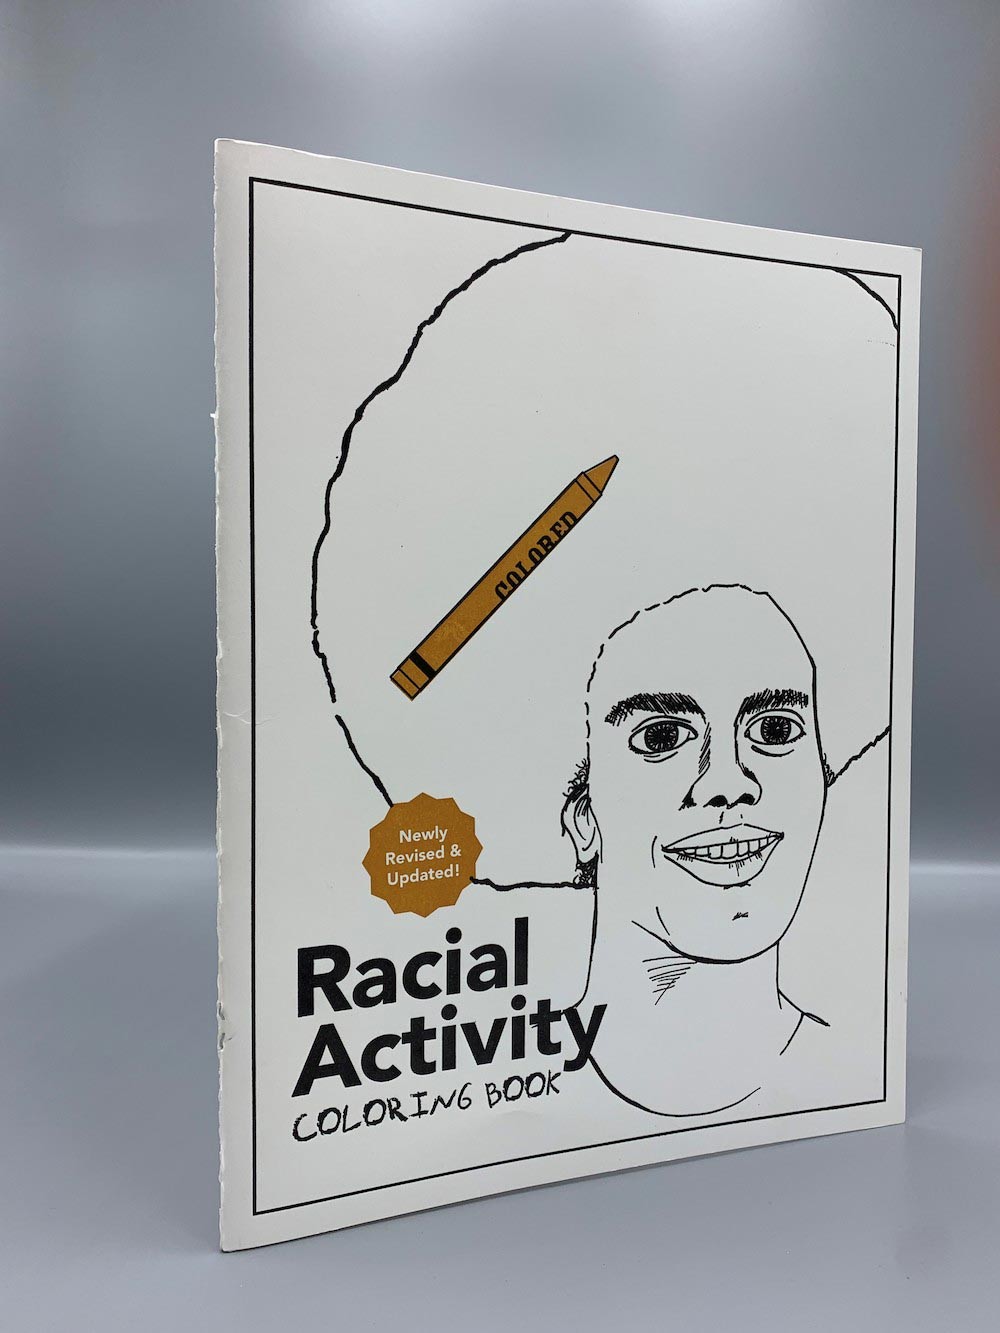 Ben Blount, ‘Racial Activity Coloring Book’ - Evanston, IL. 2018. Open edition.